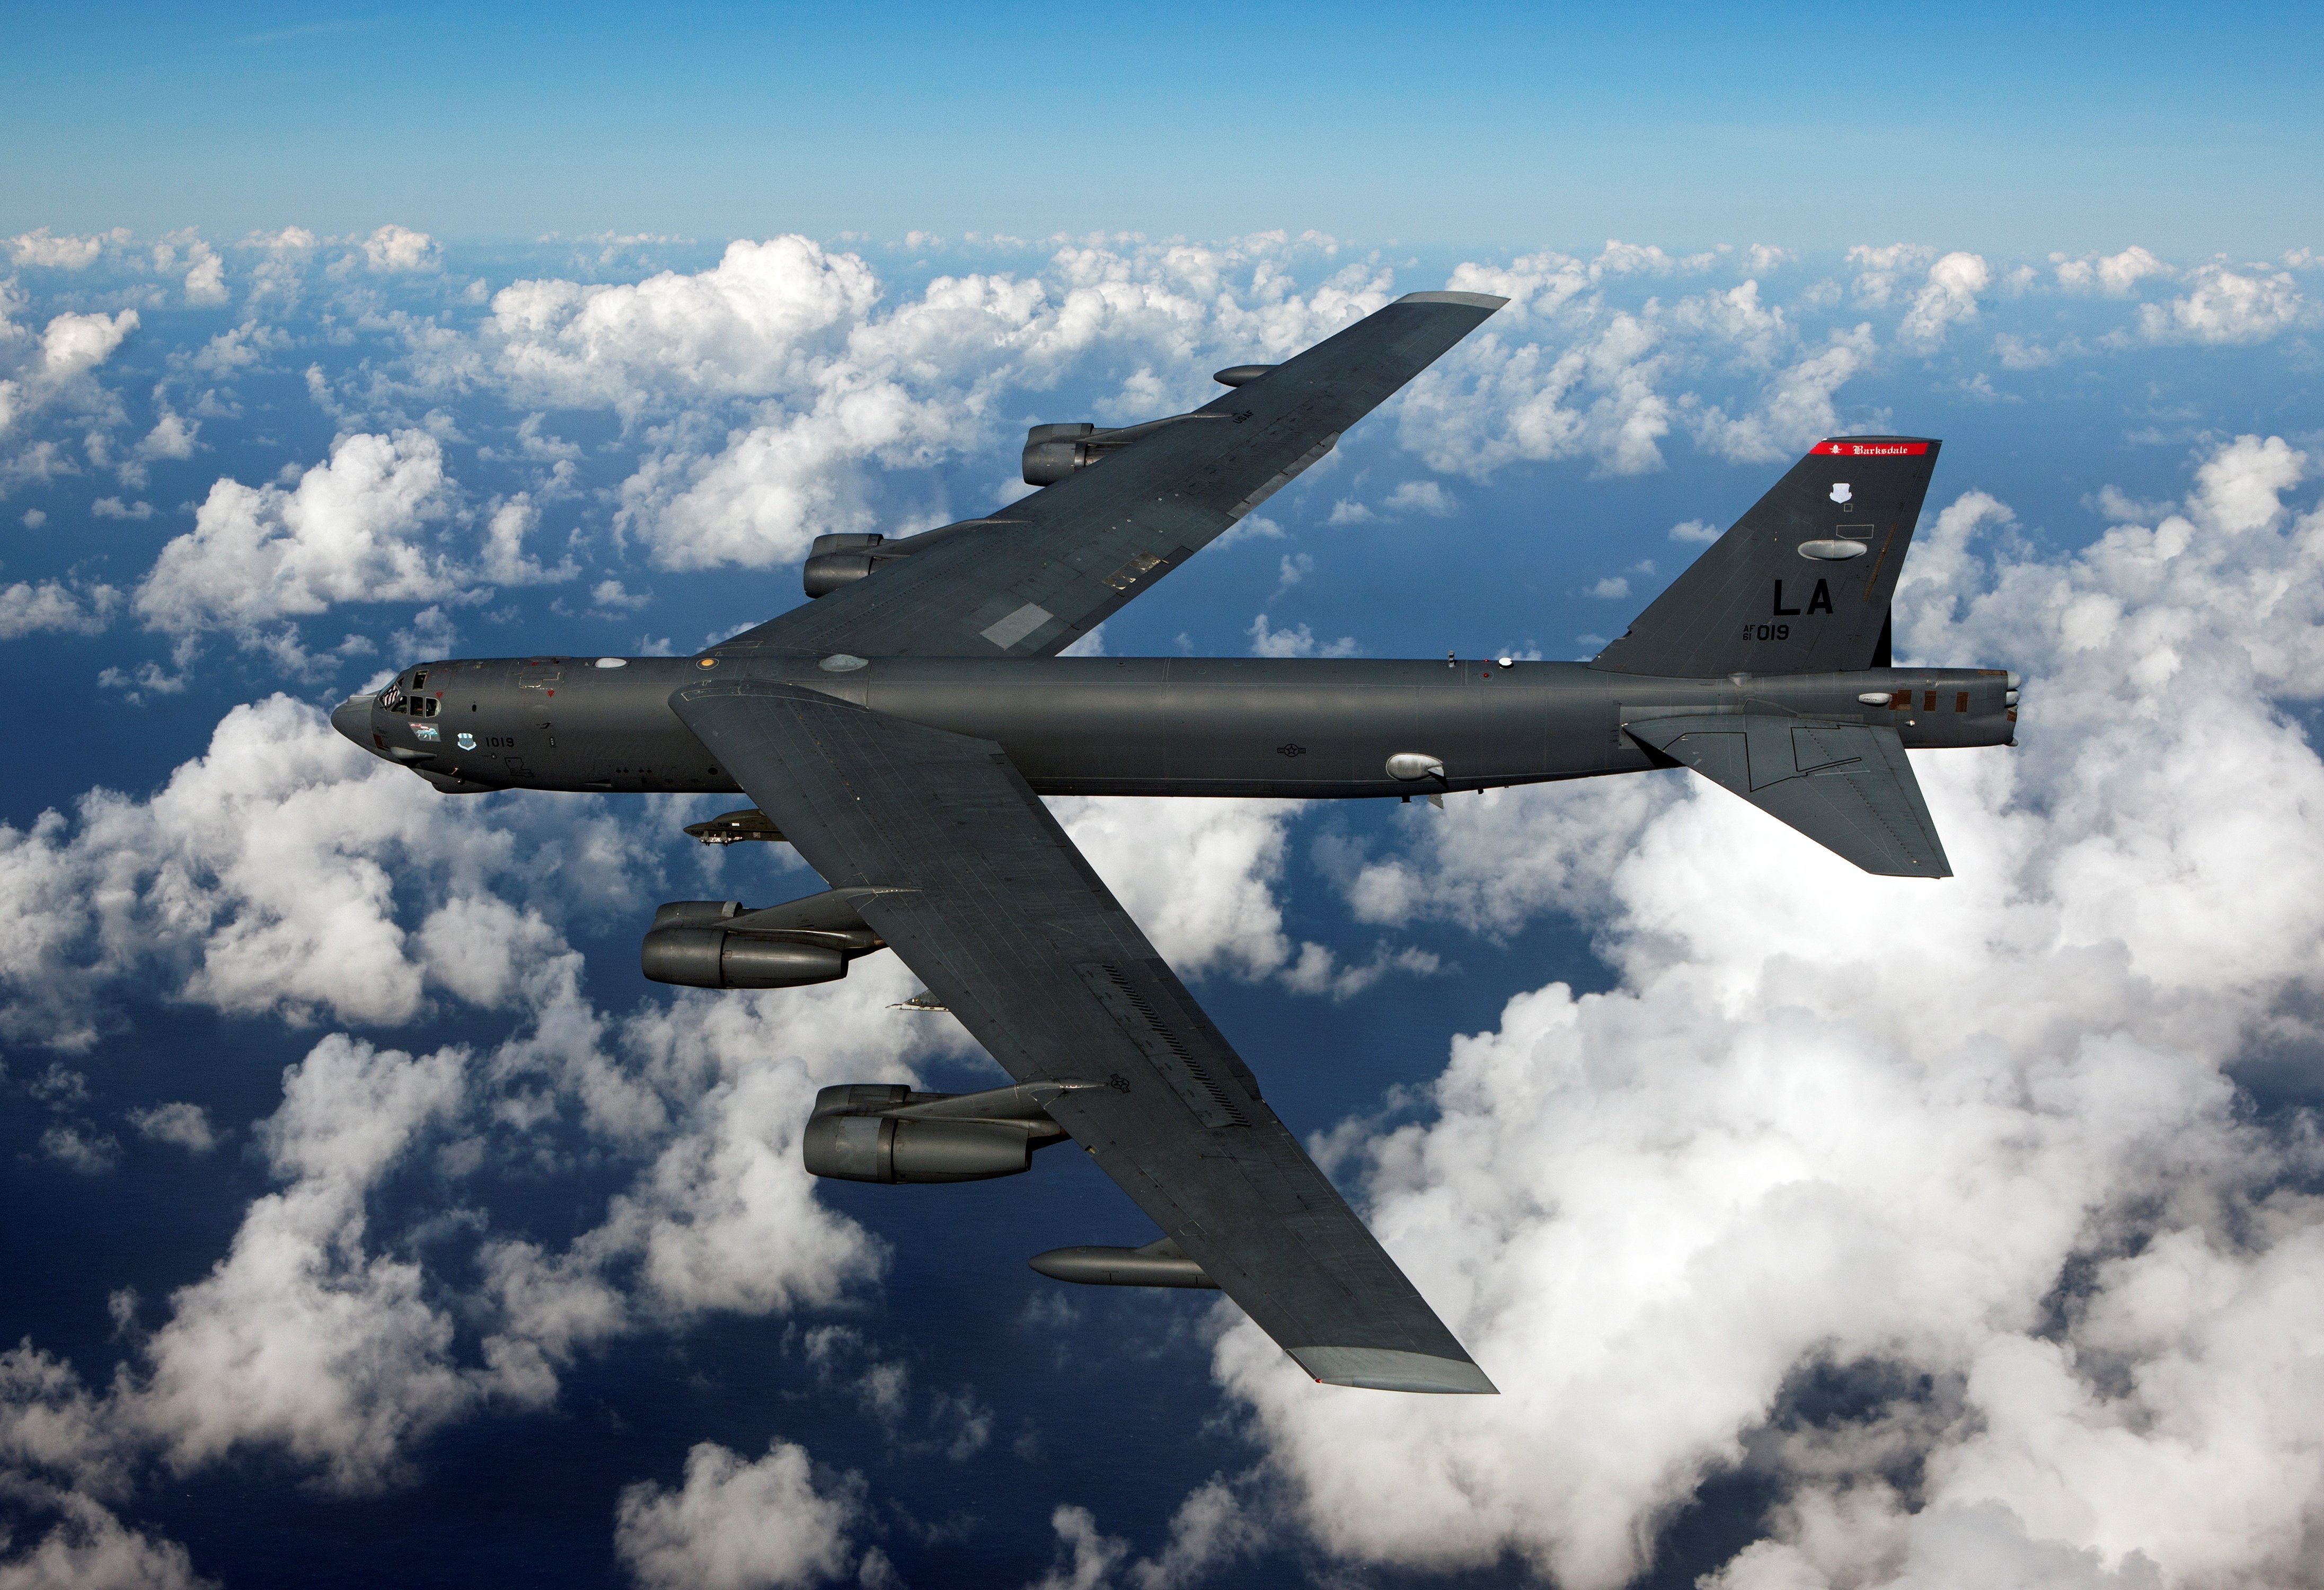 Картинка бомбардировщика. Boeing b-52 Stratofortress. B-52h ВВС США. США B-52h Stratofortress. В-52н ВВС США бомбардировщик.